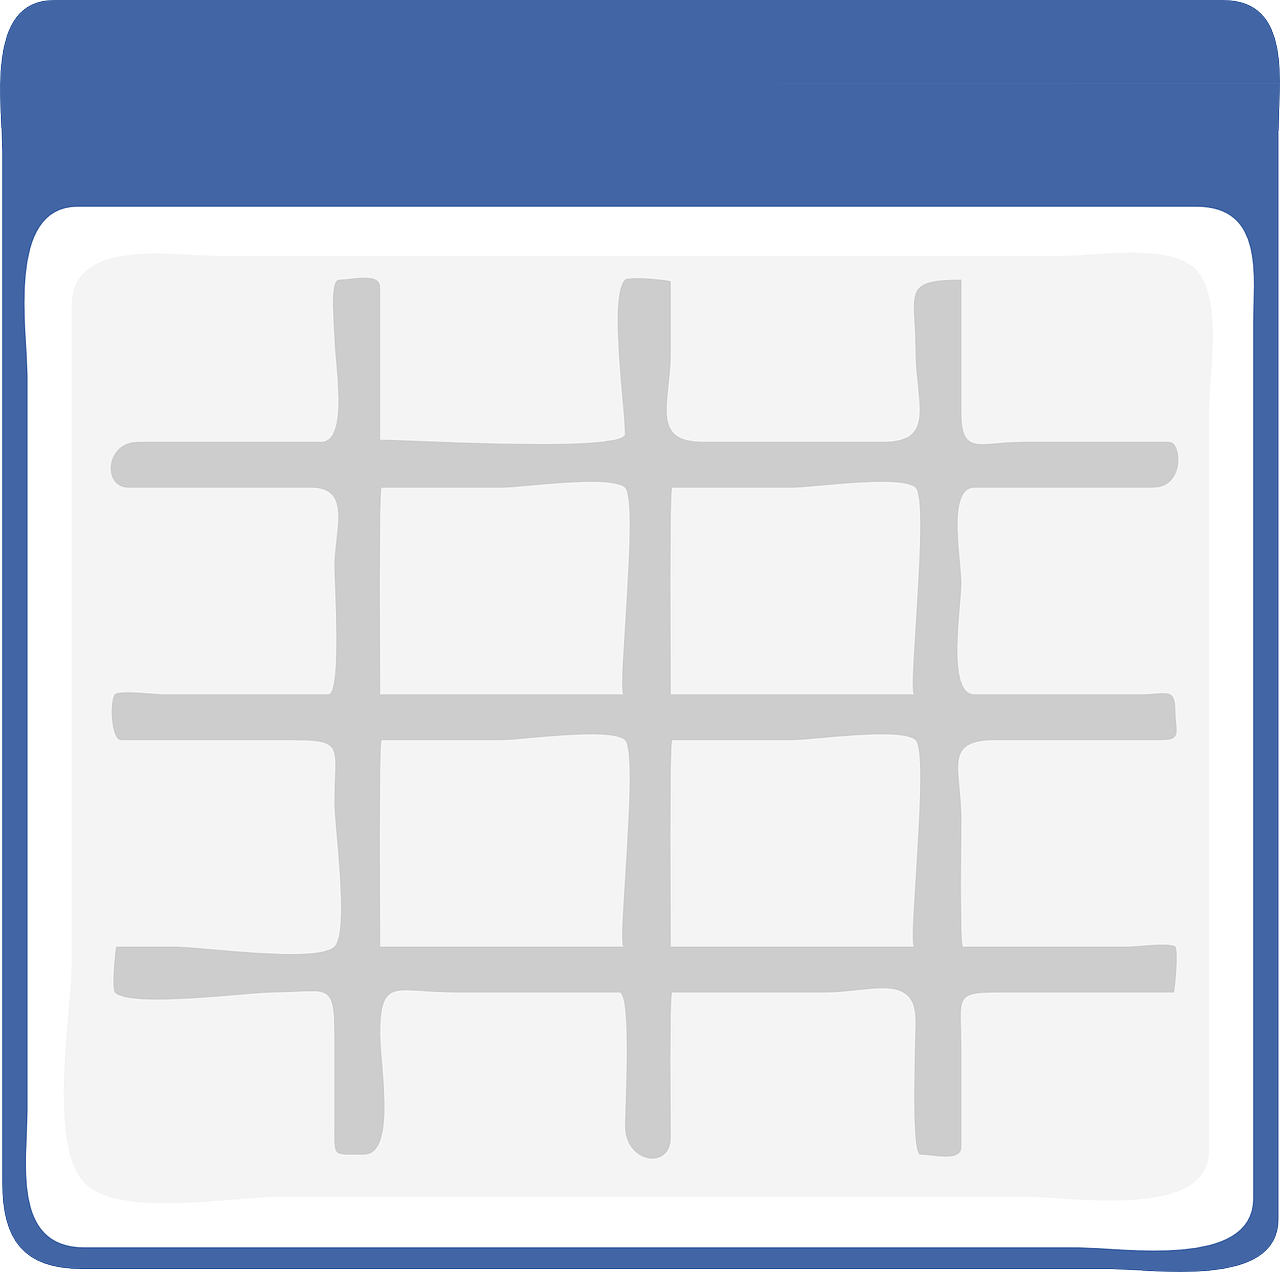 Spreadsheet App Icon